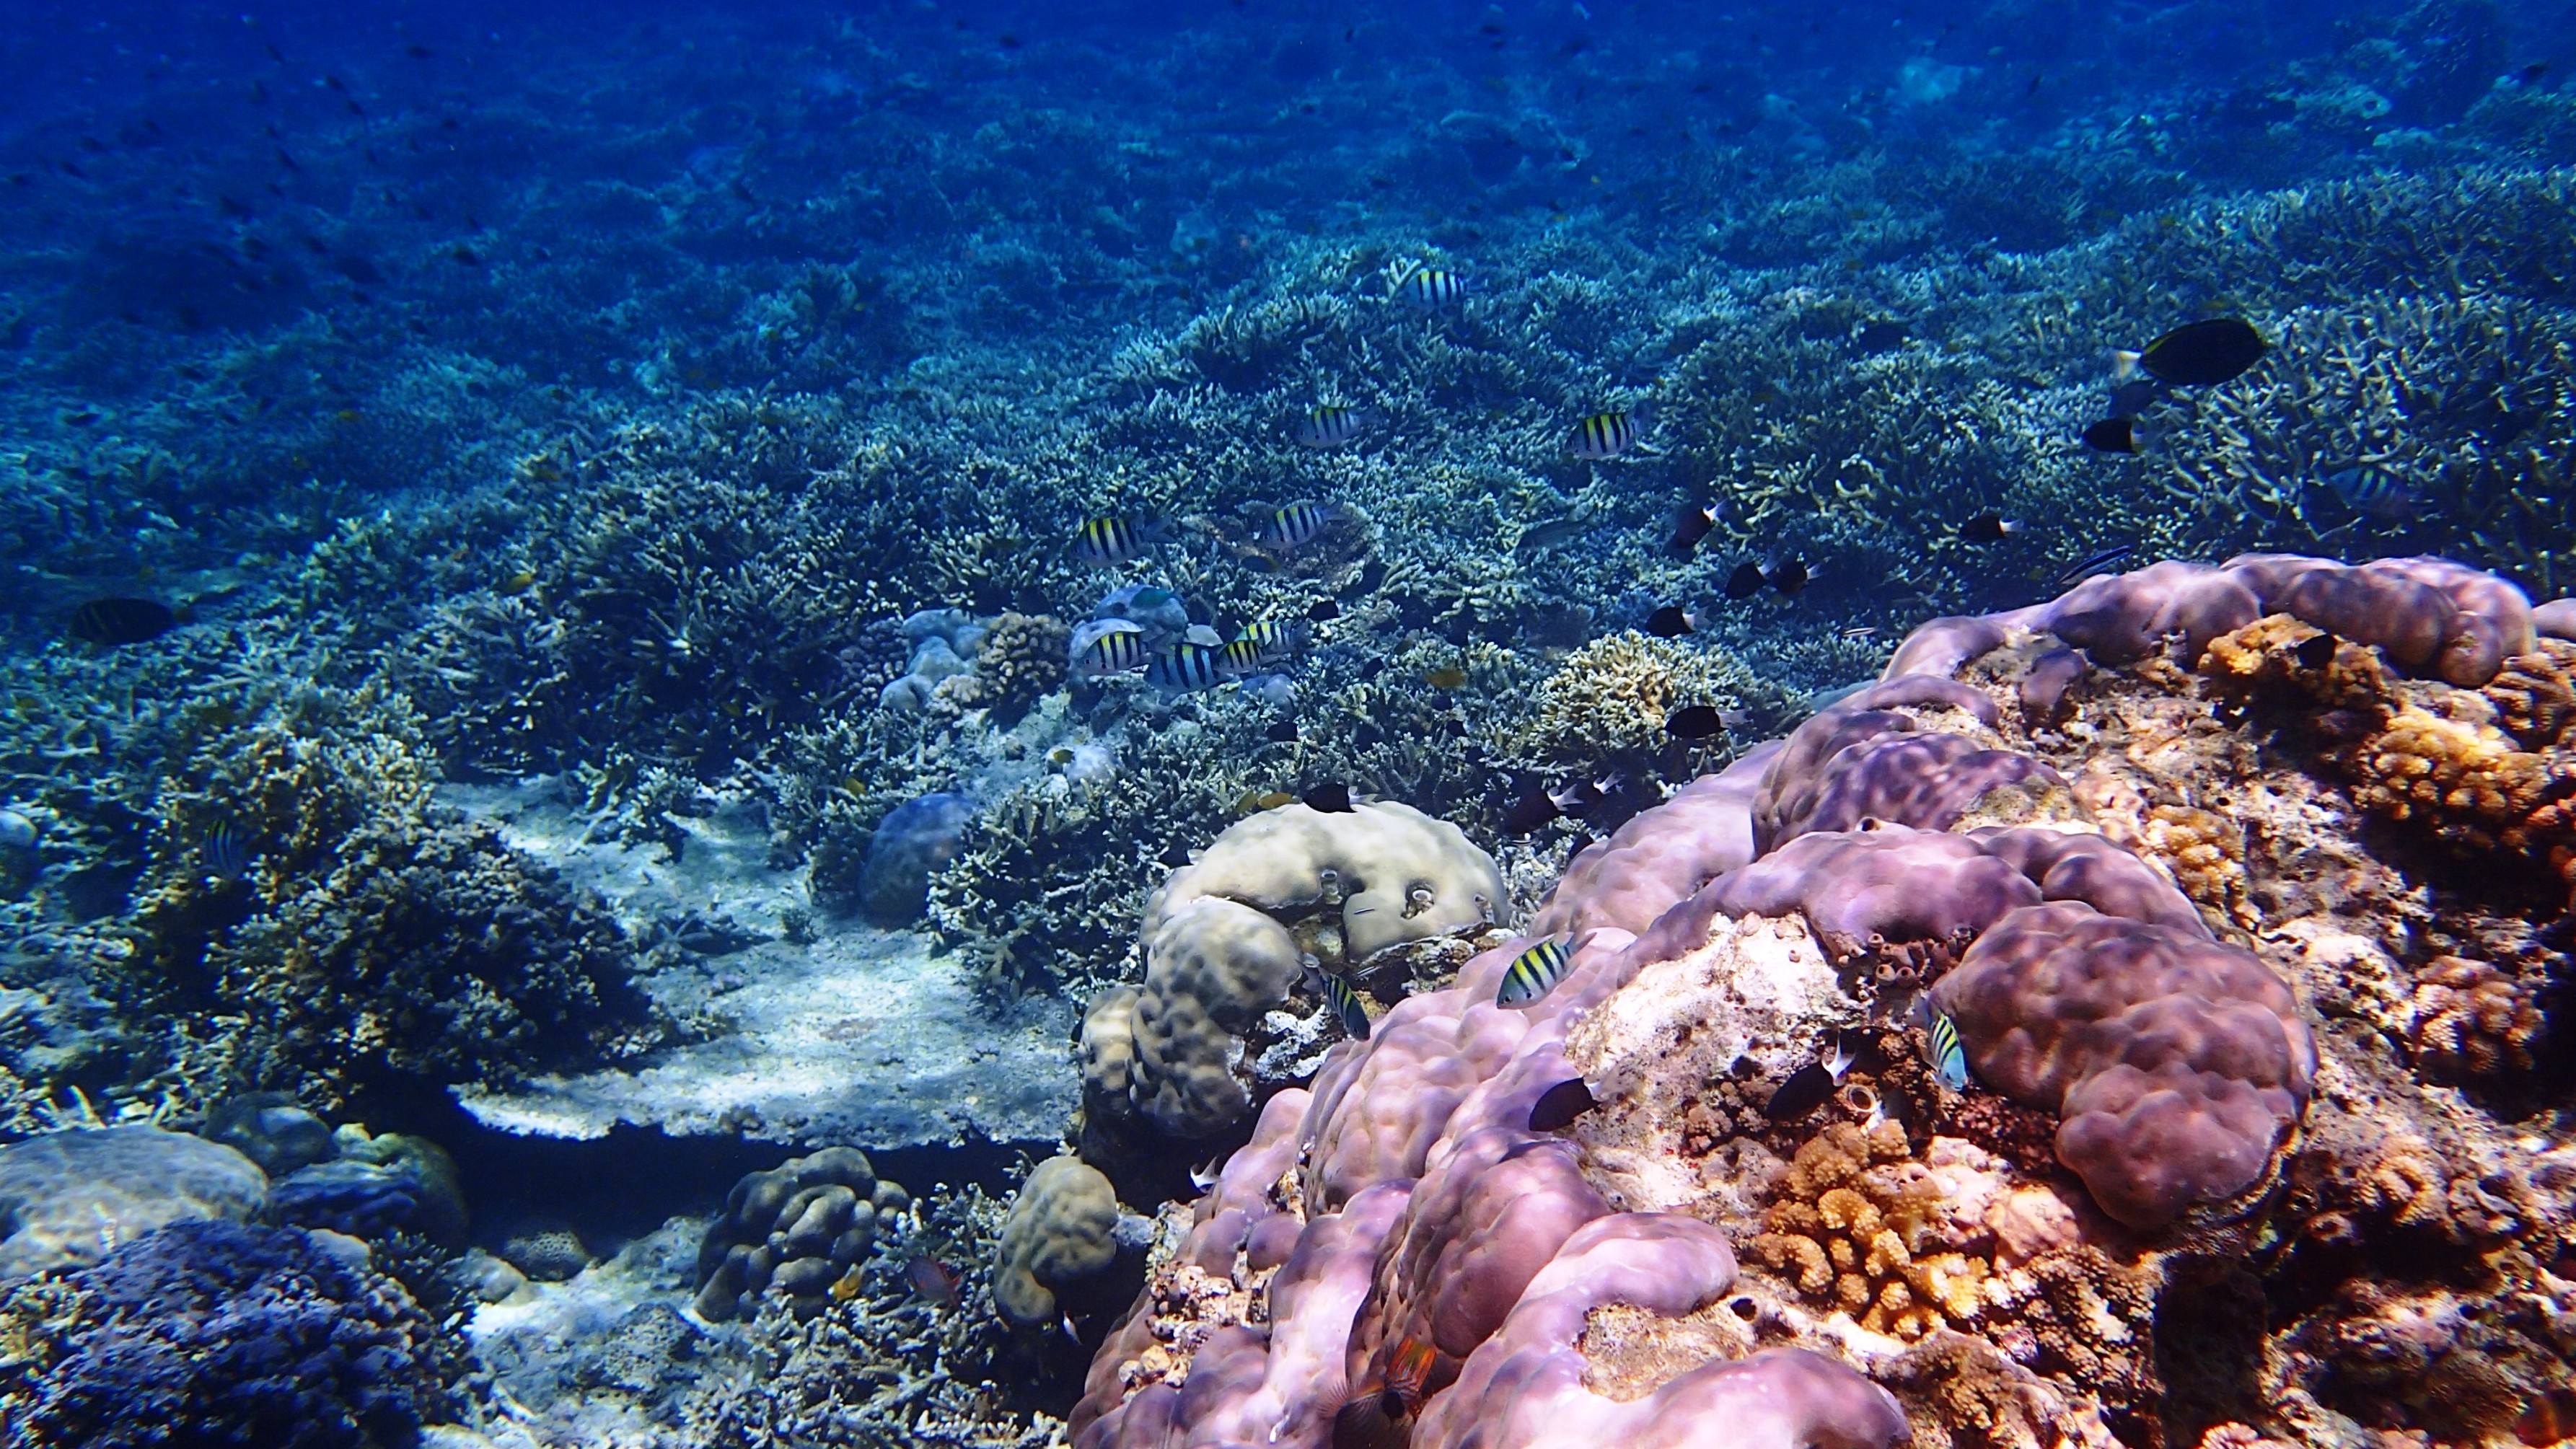 fondos de pantalla pemandangan bawah laut bergerak,arrecife,arrecife de coral,submarino,biología marina,coral